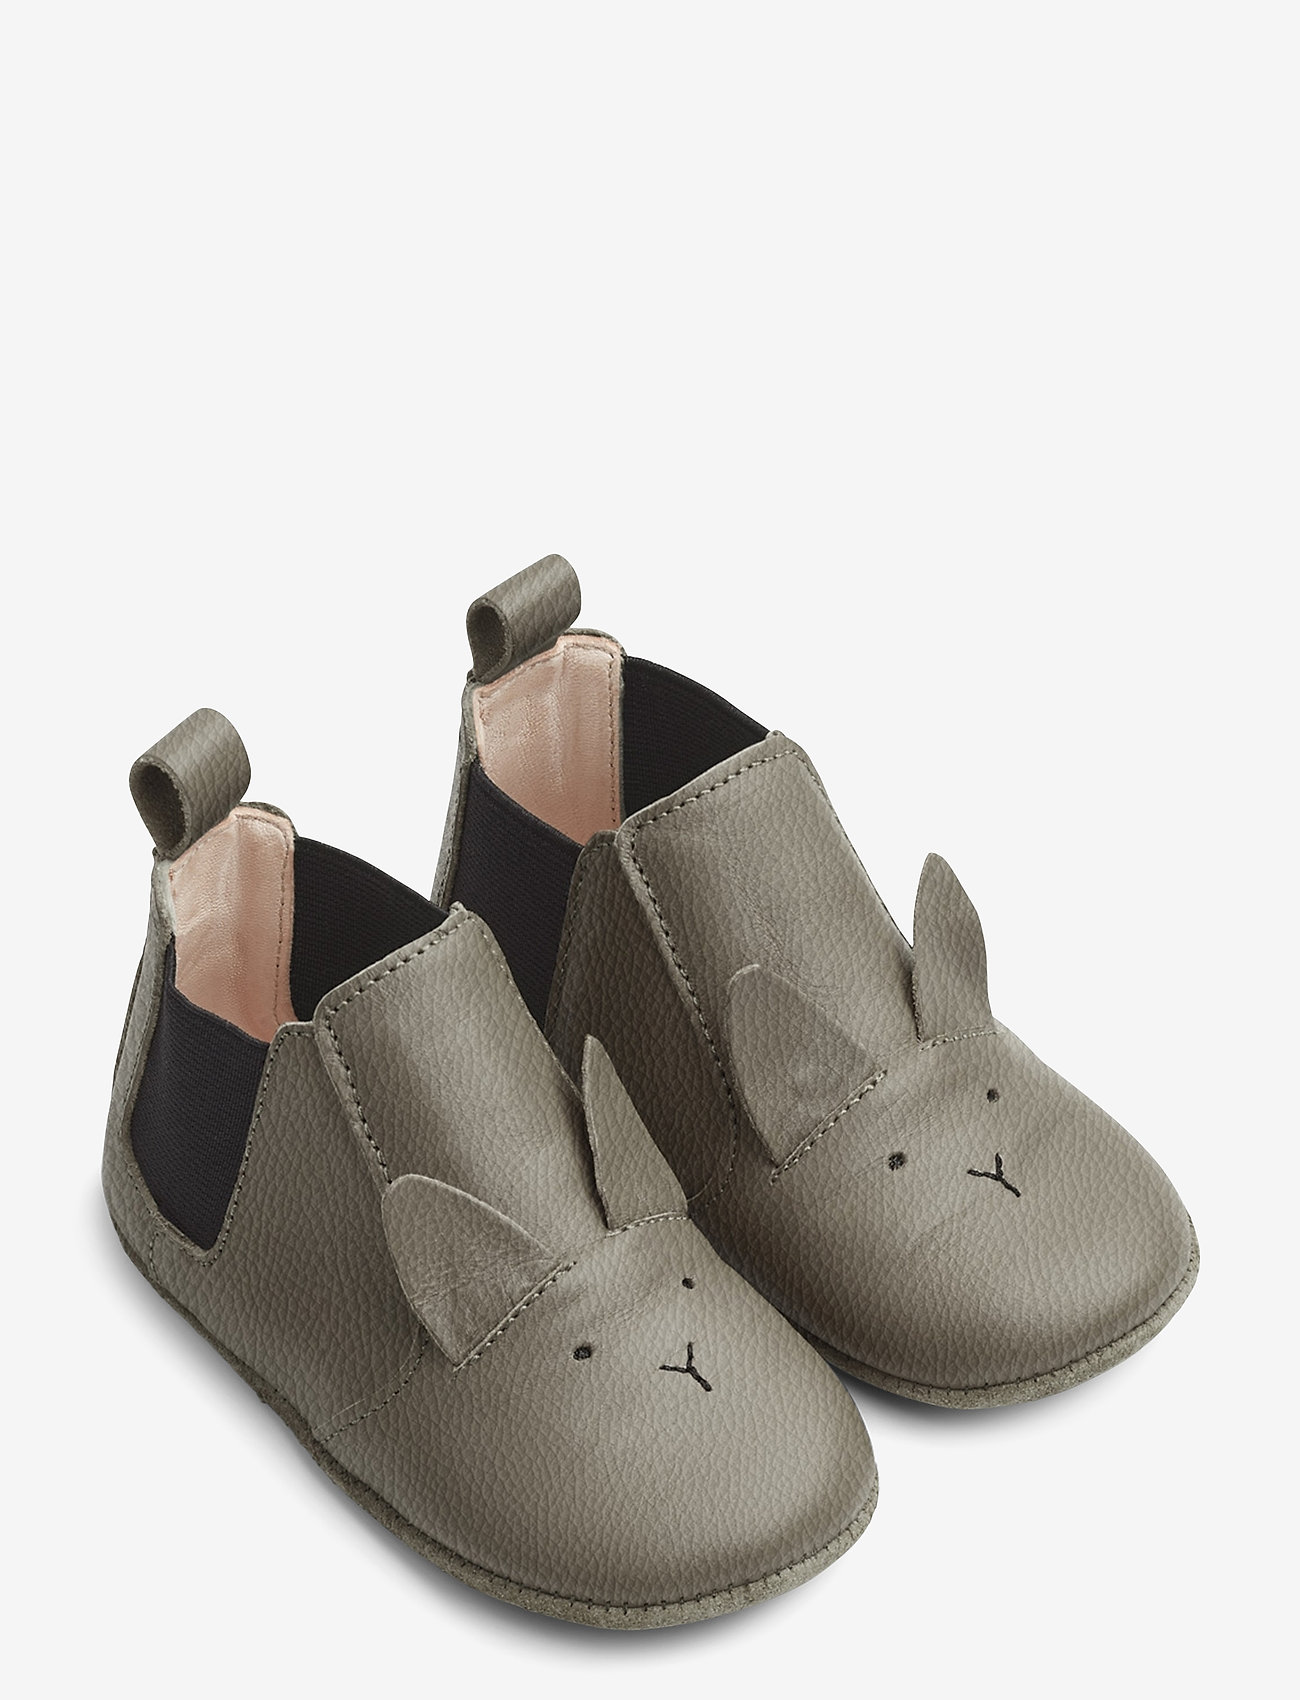 Liewood - Edith leather slippers - kaufen nach alter - rabbit grey - 0